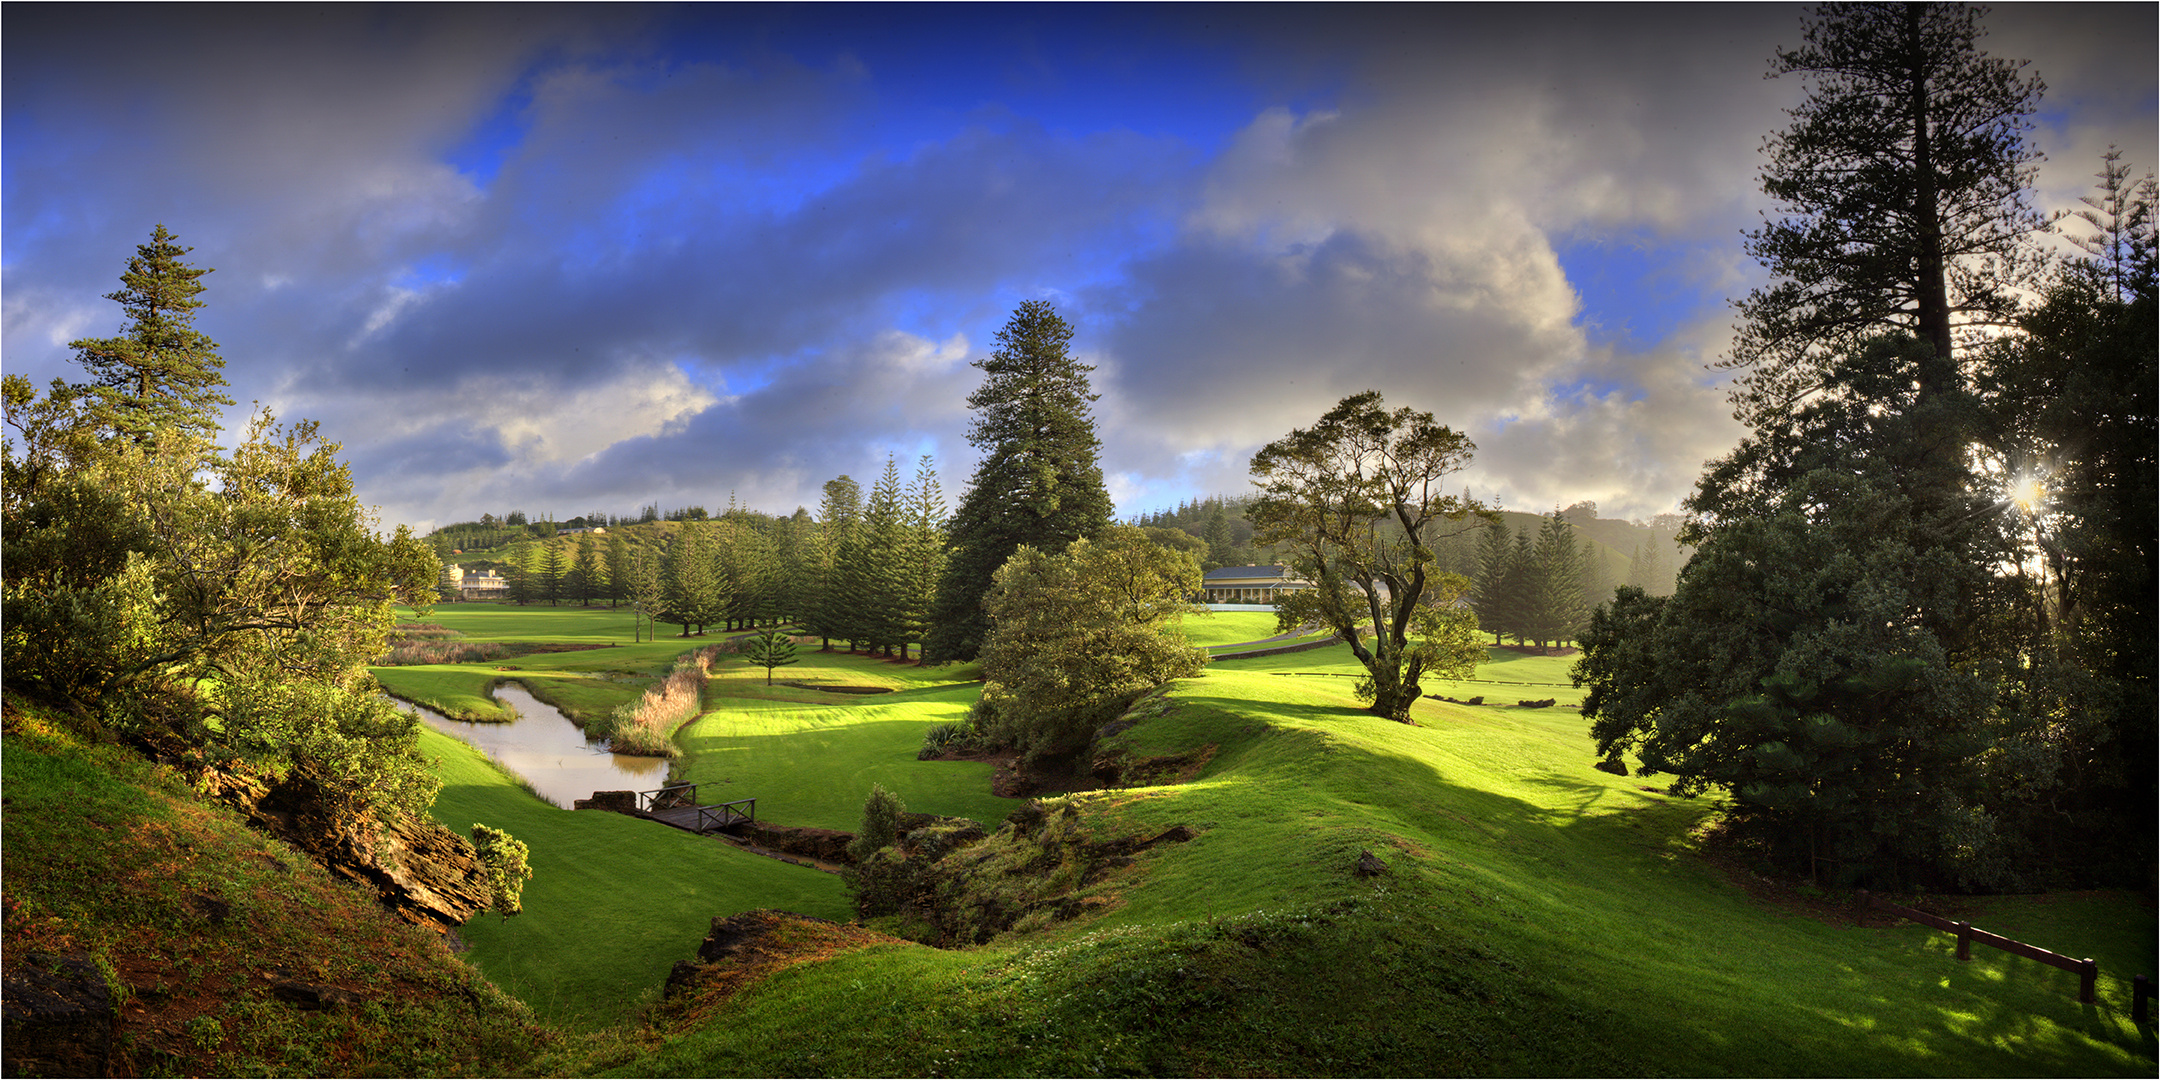 Norfolk Island, Photographic workshop, Stunning pictures, Island beauty, 2160x1080 Dual Screen Desktop